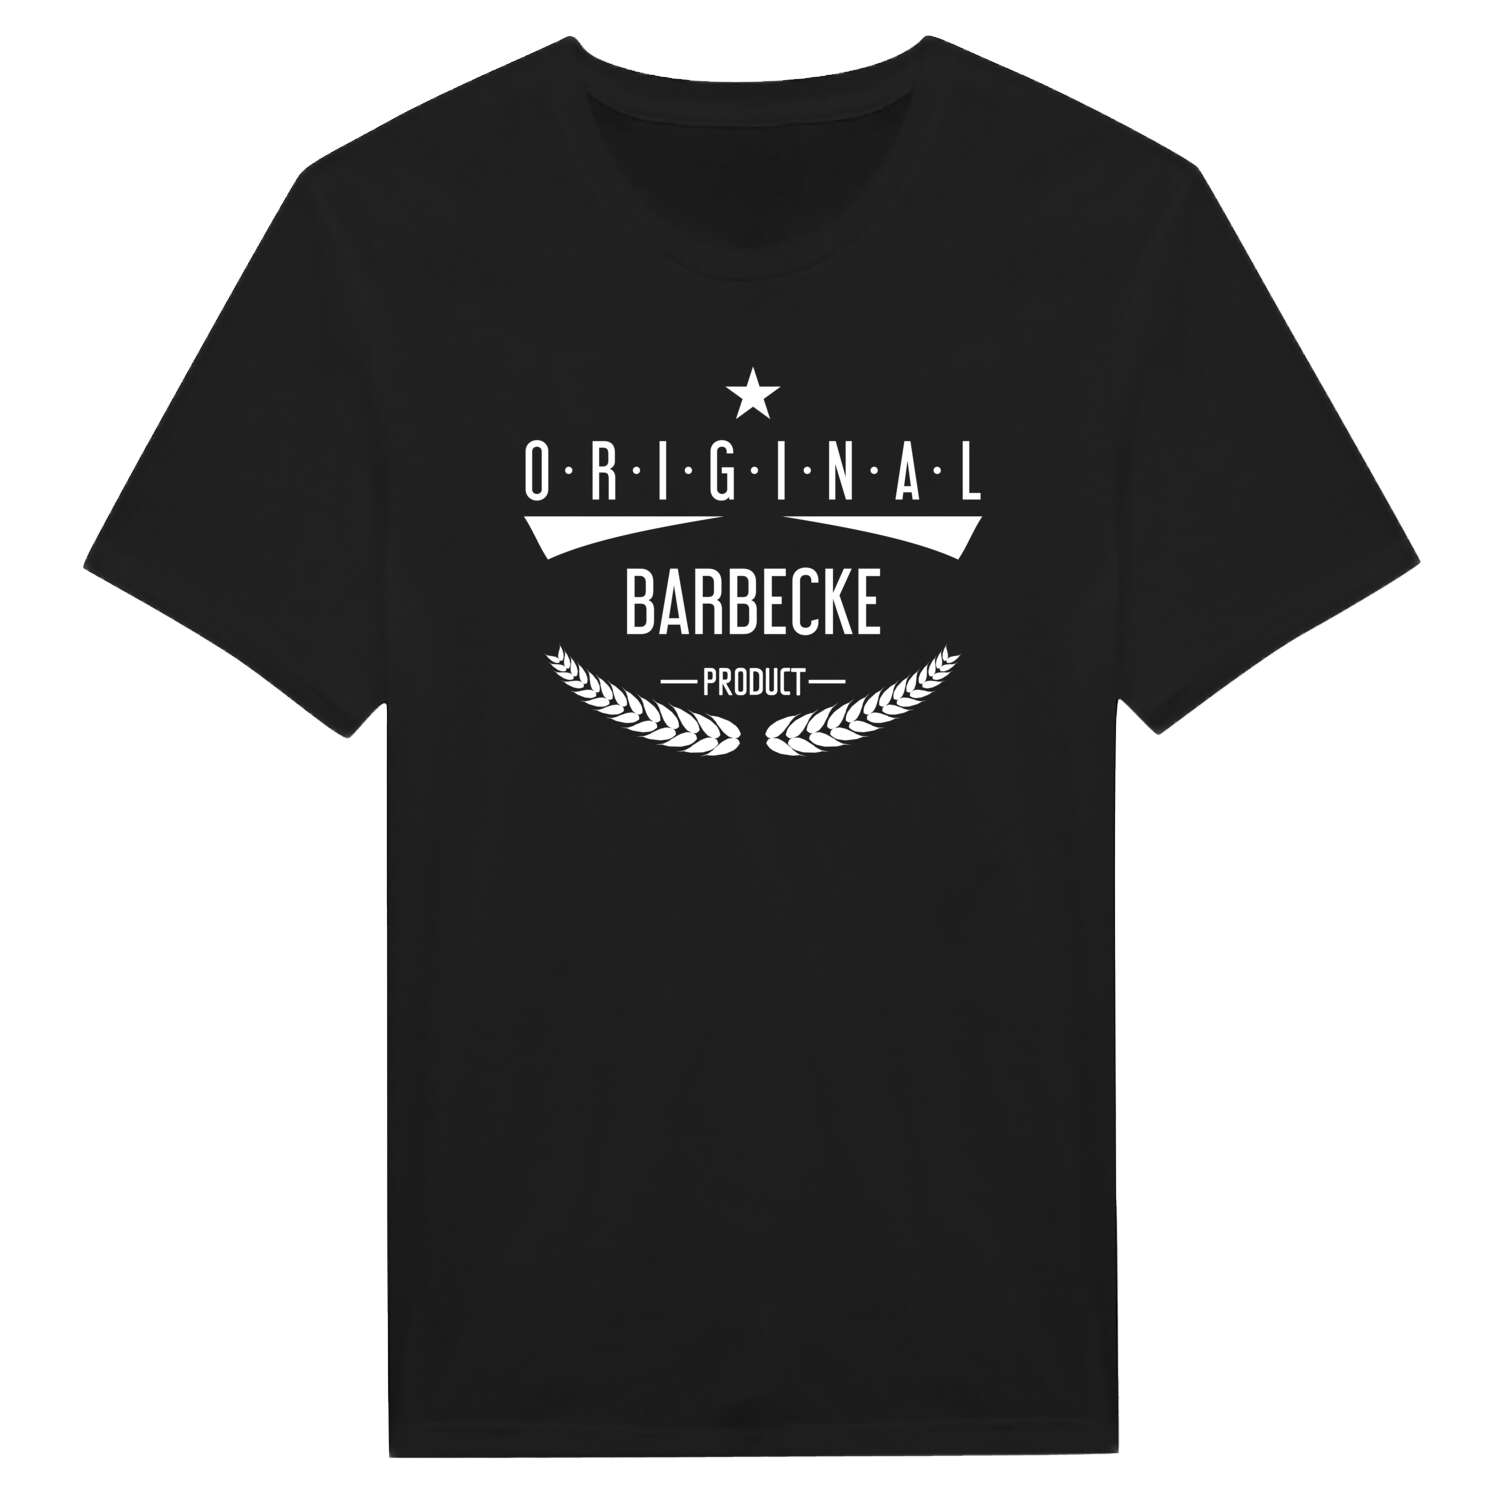 Barbecke T-Shirt »Original Product«